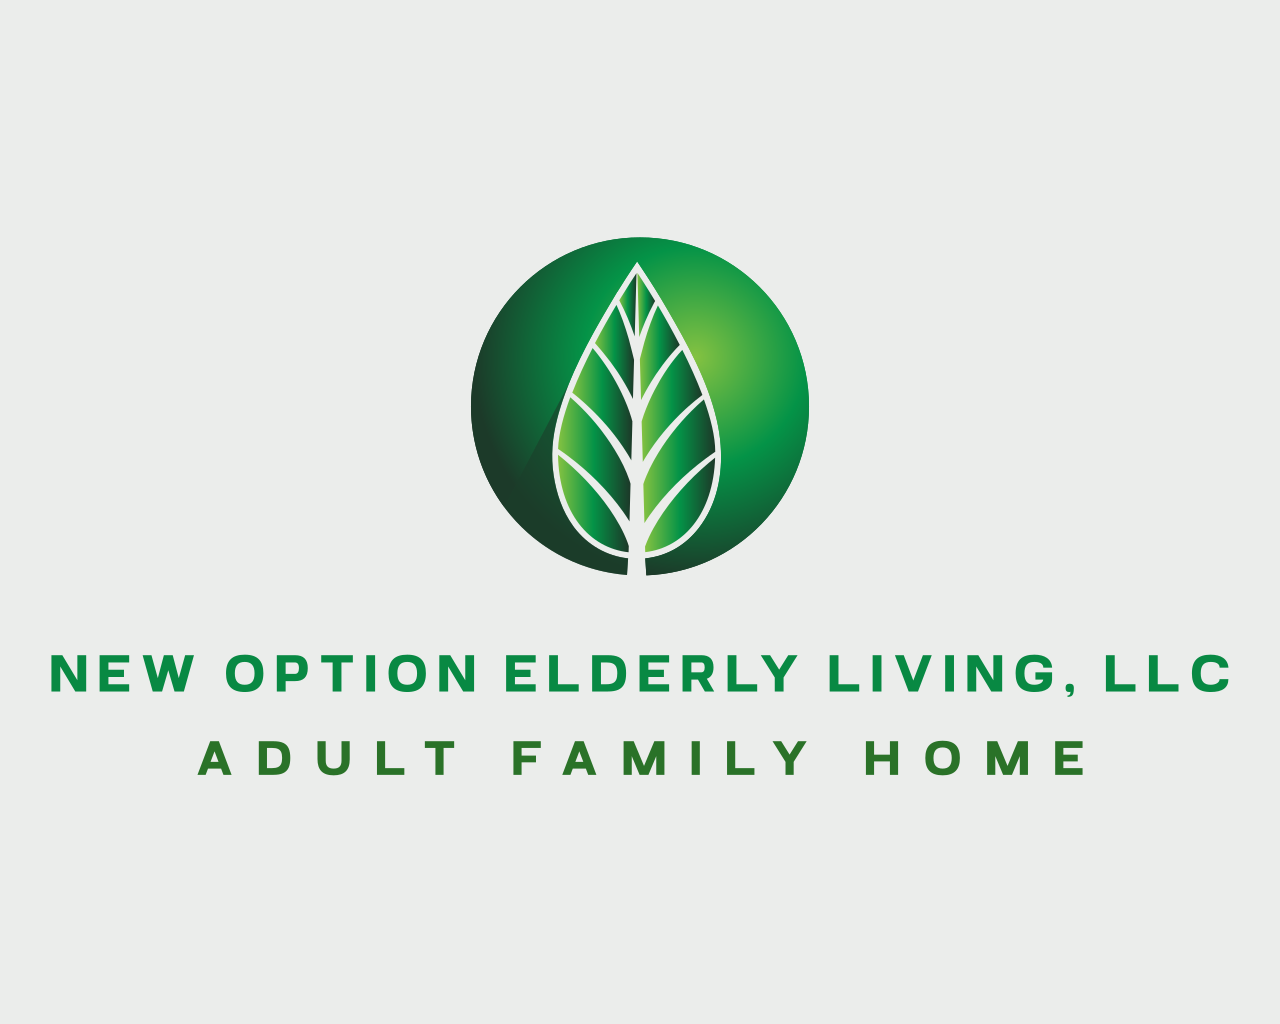 NEW OPTION ELDERLY LIVING, LLC's web page